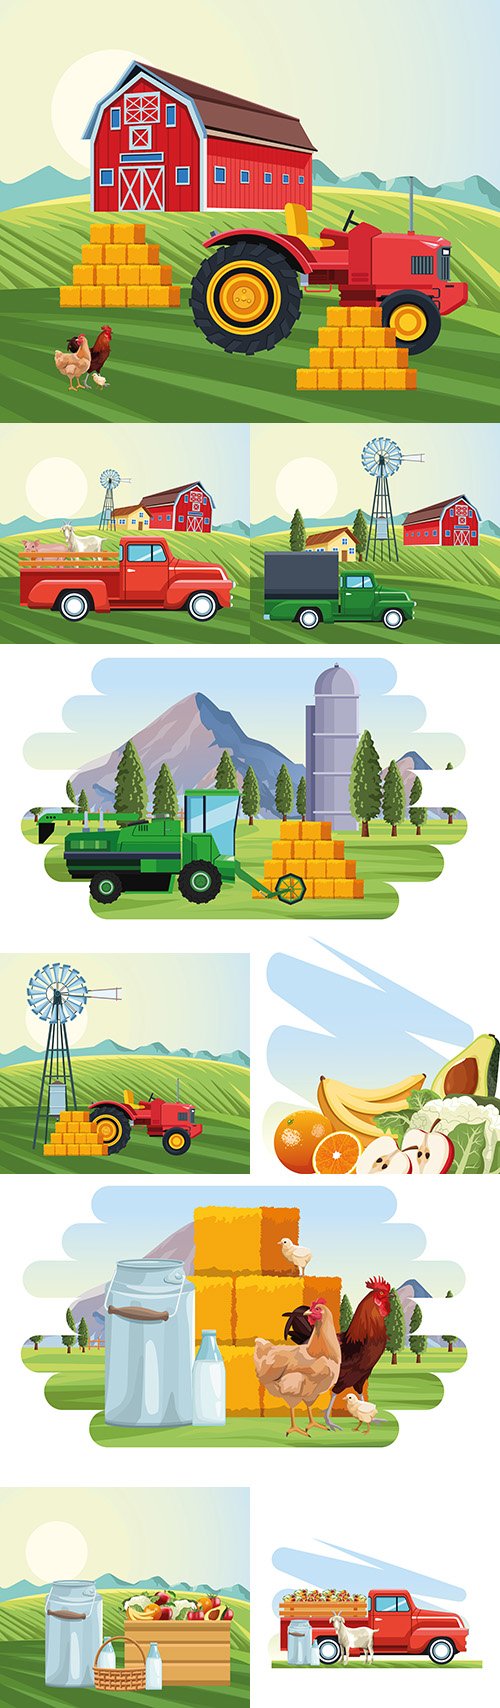 Farming and animal rural landscape illustration